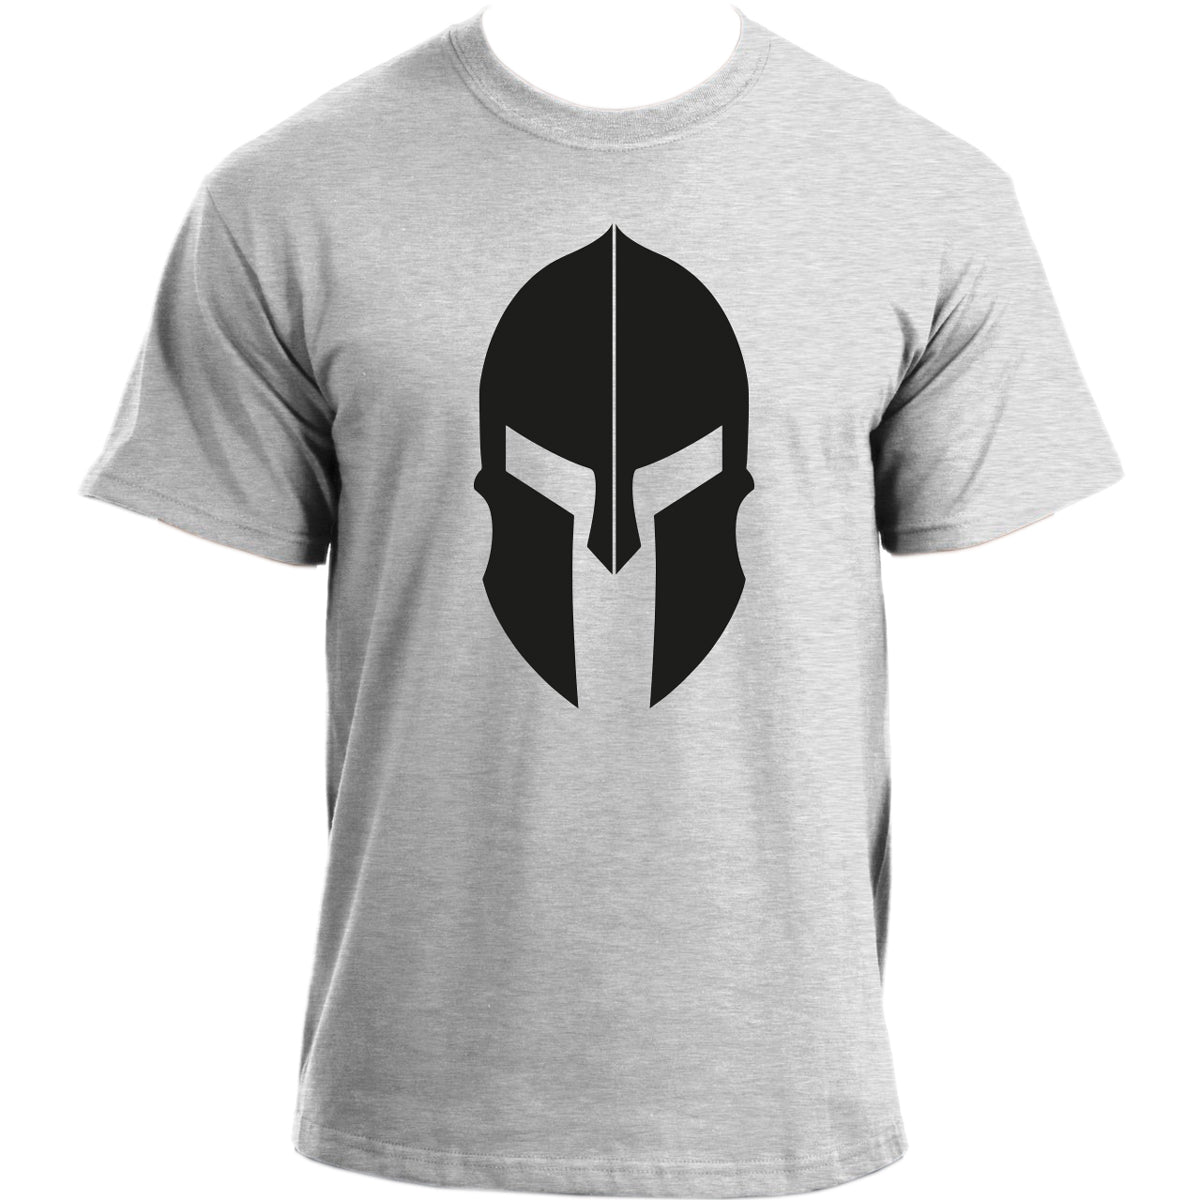 Spartan Helmet Sports T Shirt for Men - Training Top, Mens Tshirt For The Gym